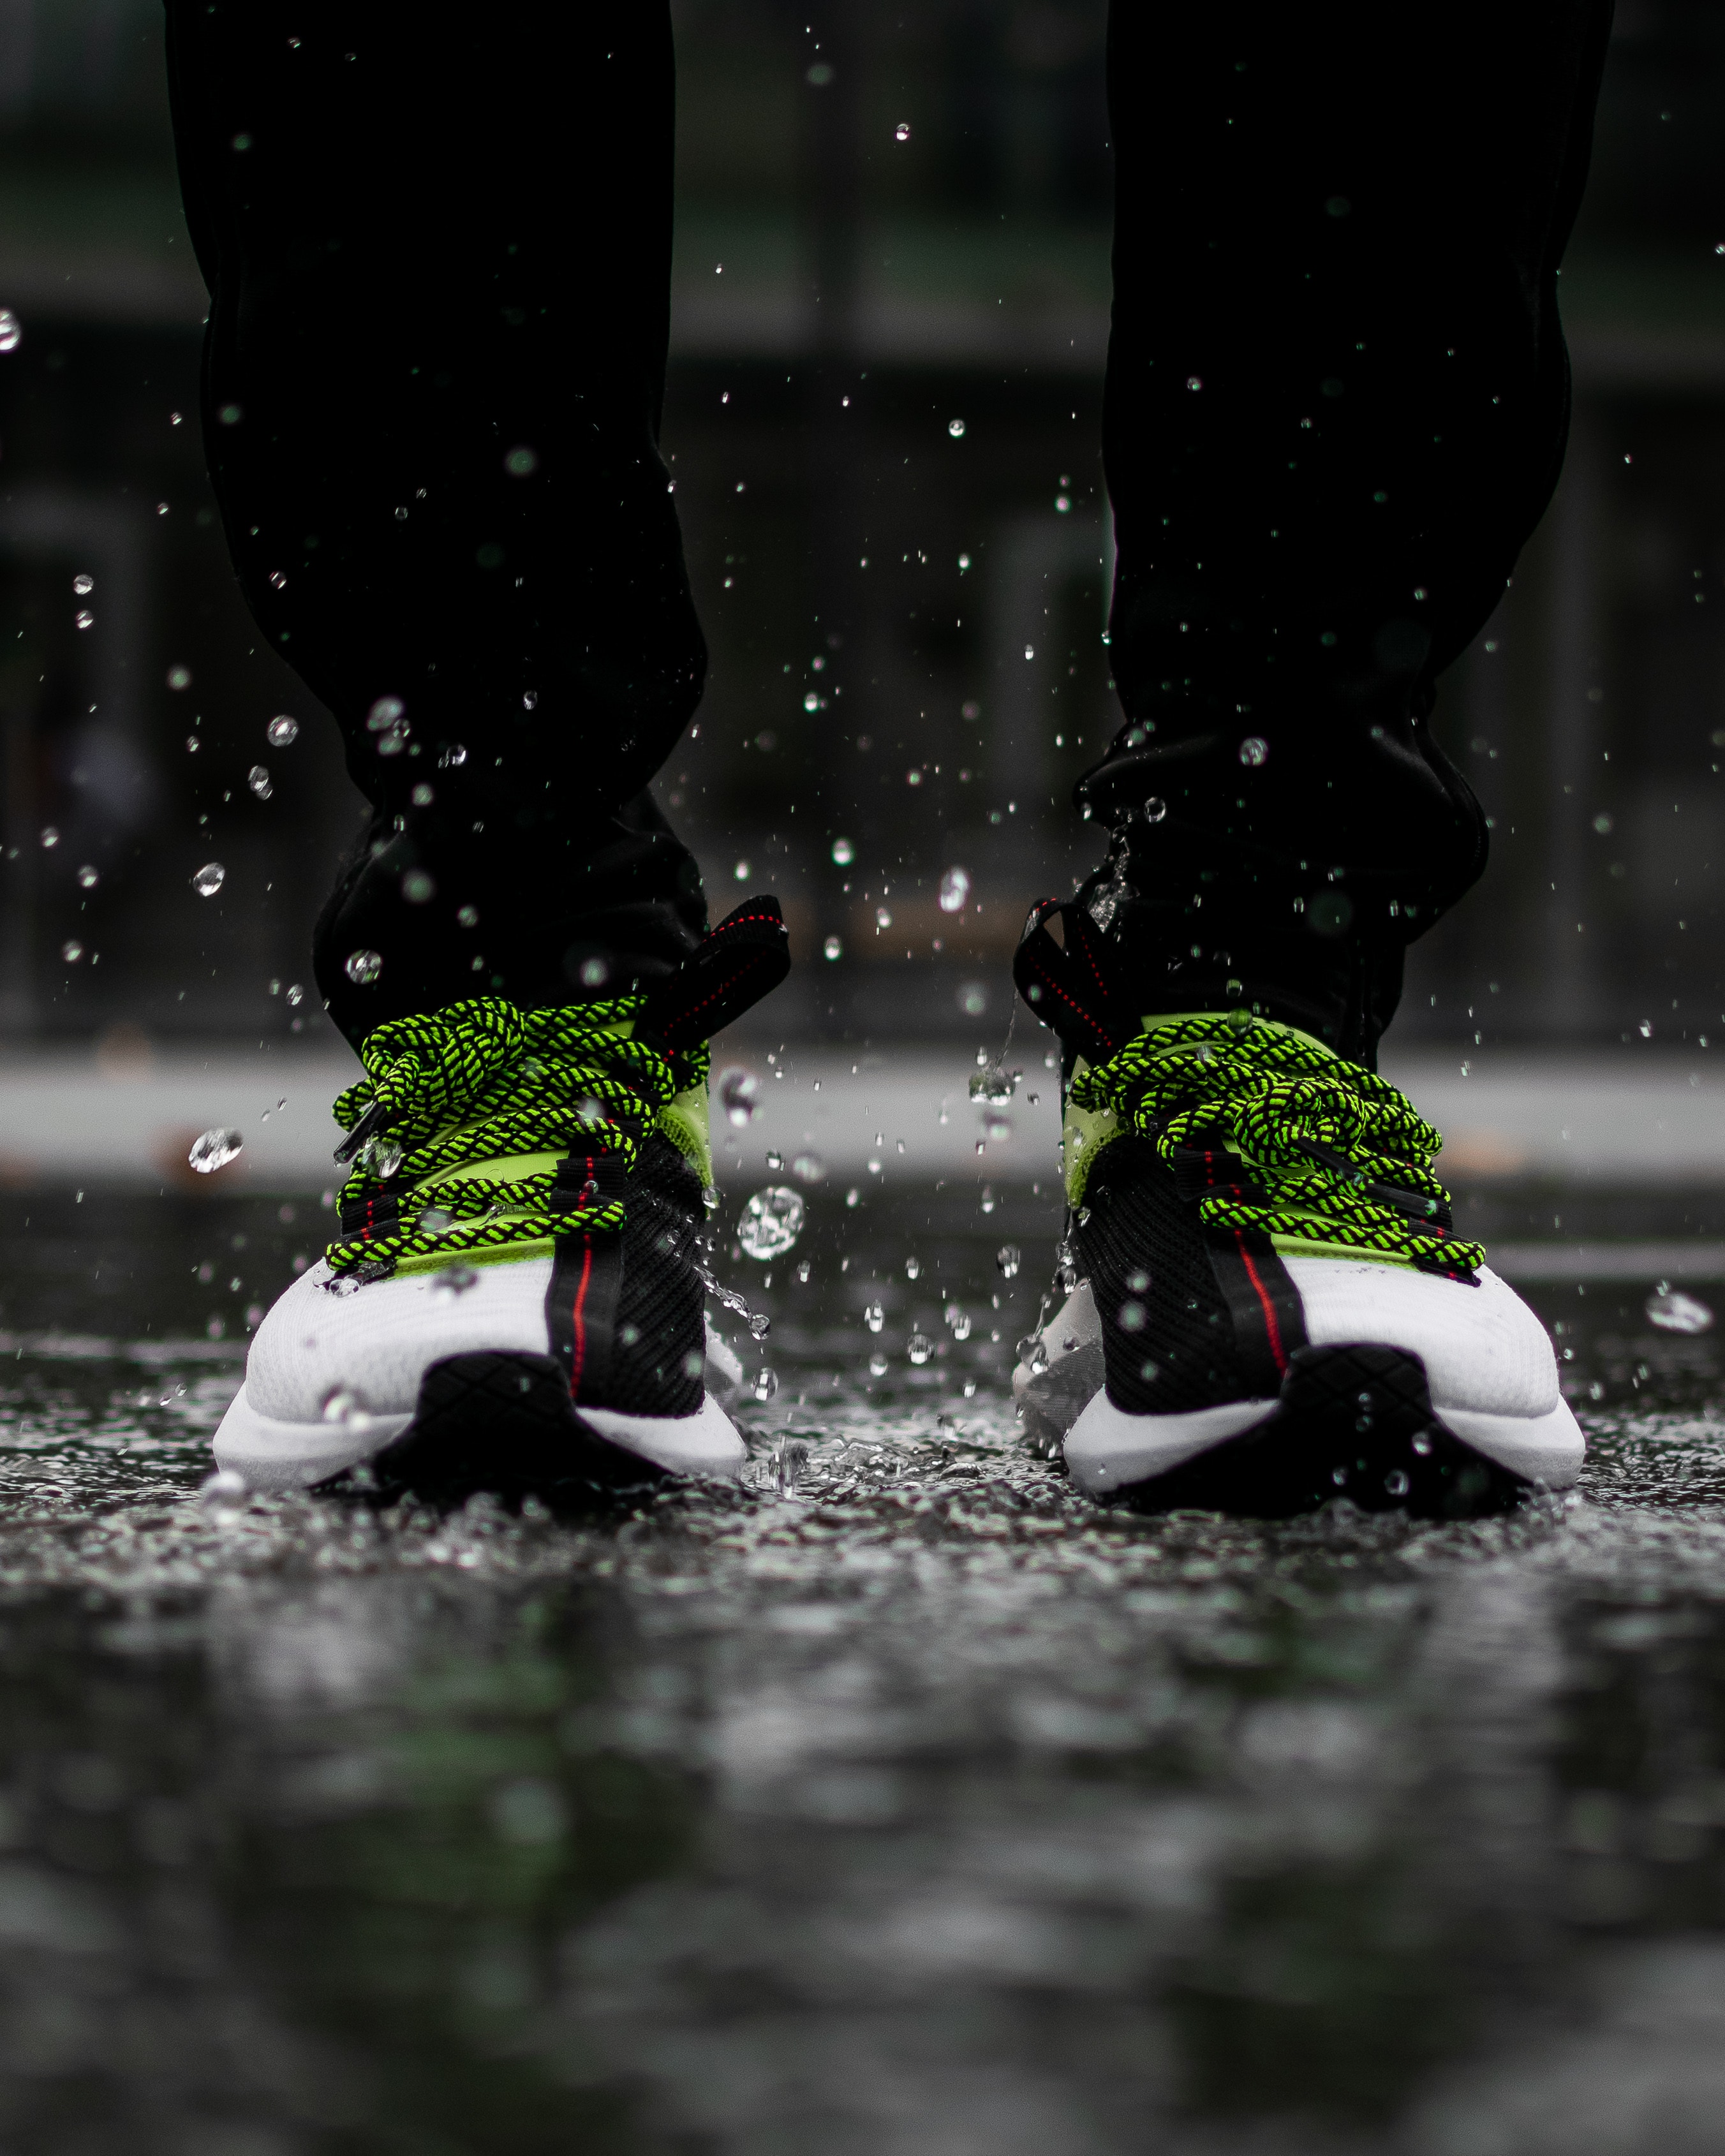 Desktop Backgrounds Spray rain, miscellanea, miscellaneous, footwear